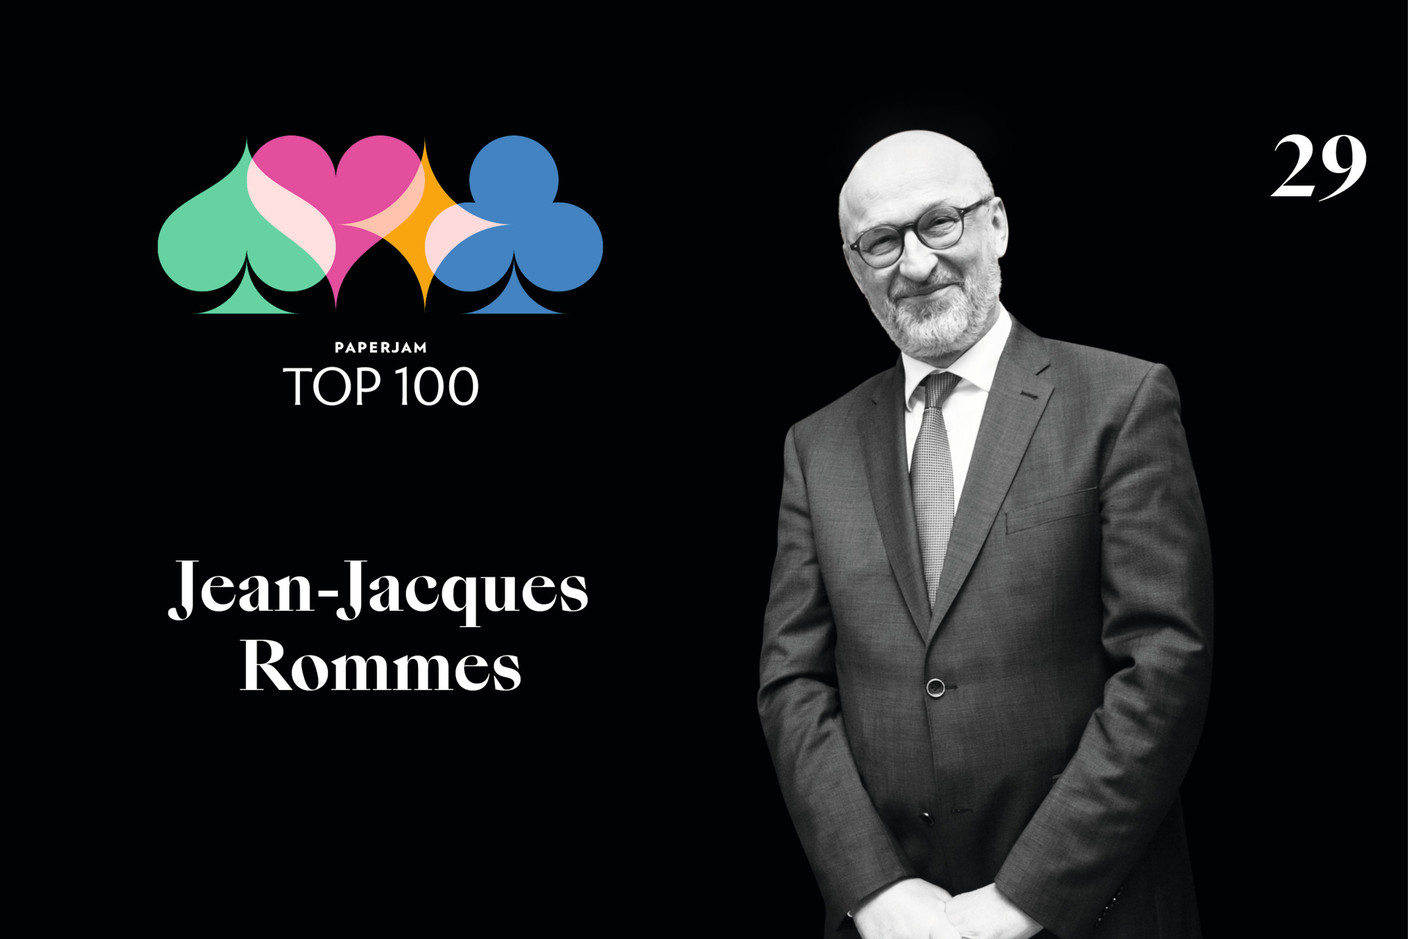 Jean-Jacques Rommes, 29e du Paperjam Top 100 2020. (Illustration: Maison Moderne)